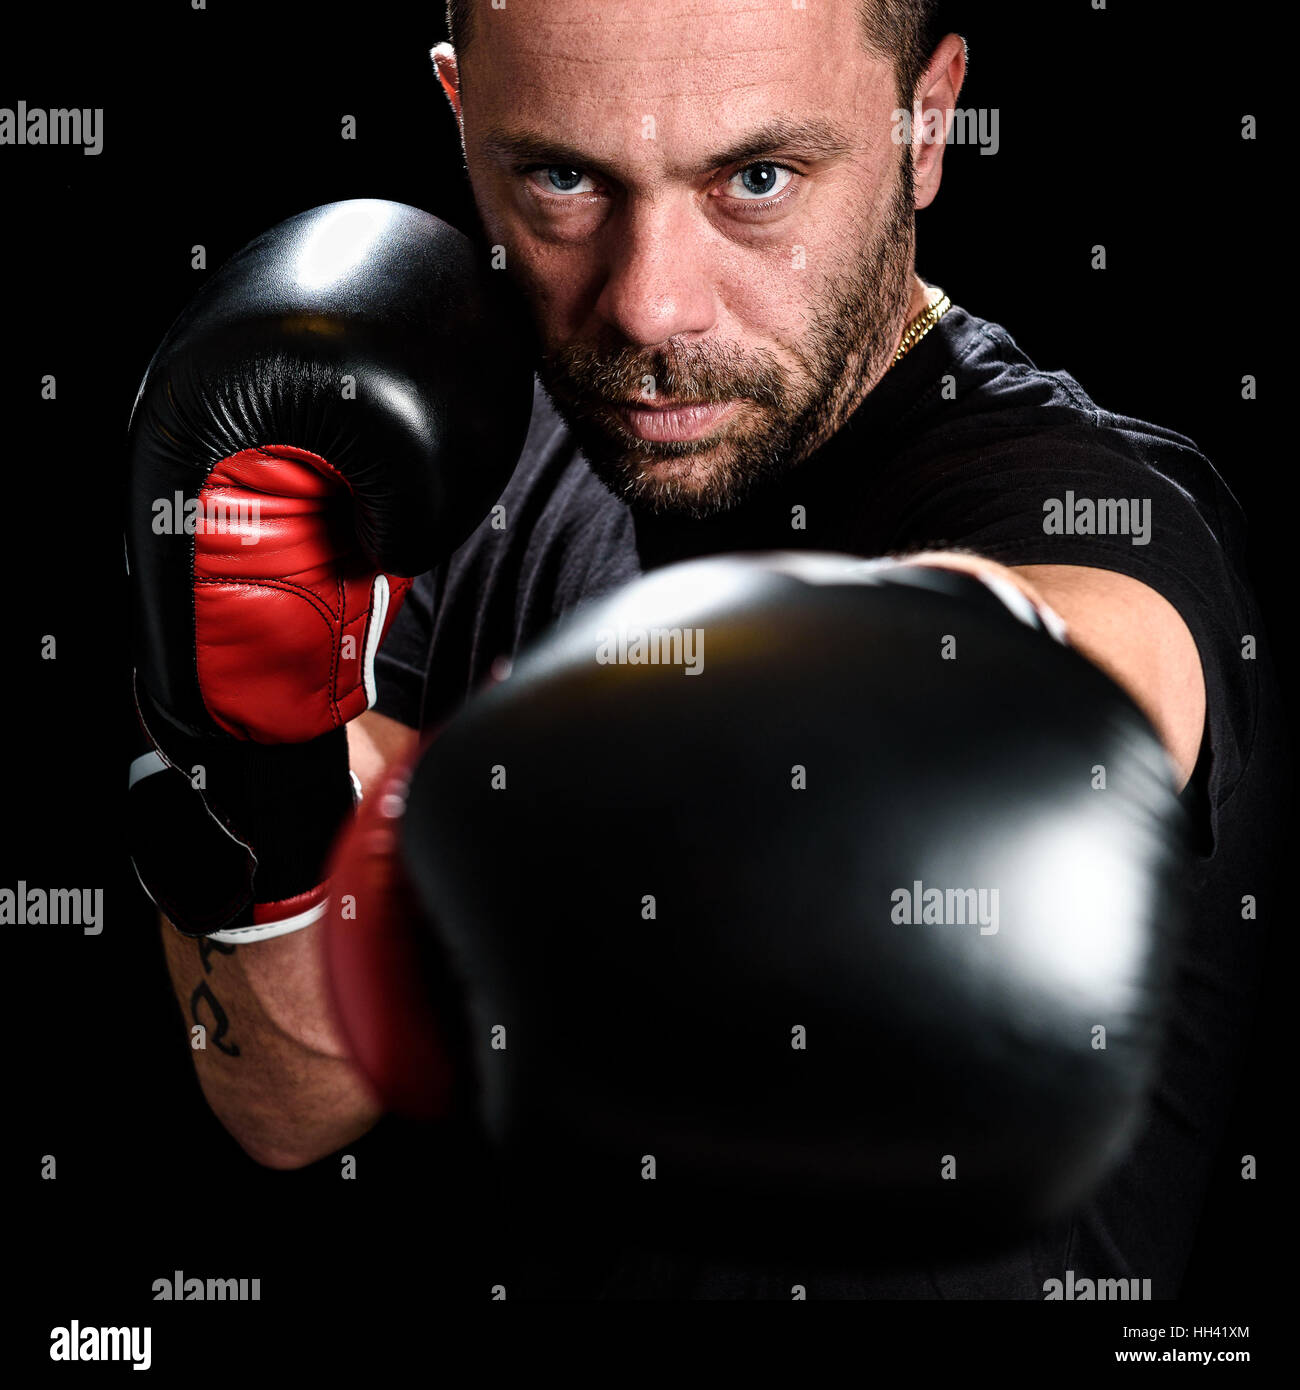 Retrato de atleta masculino boxer hombre mirando agresivo con guantes de boxeo, camisa negra y tatuajes. Aislado sobre fondo negro Foto de stock